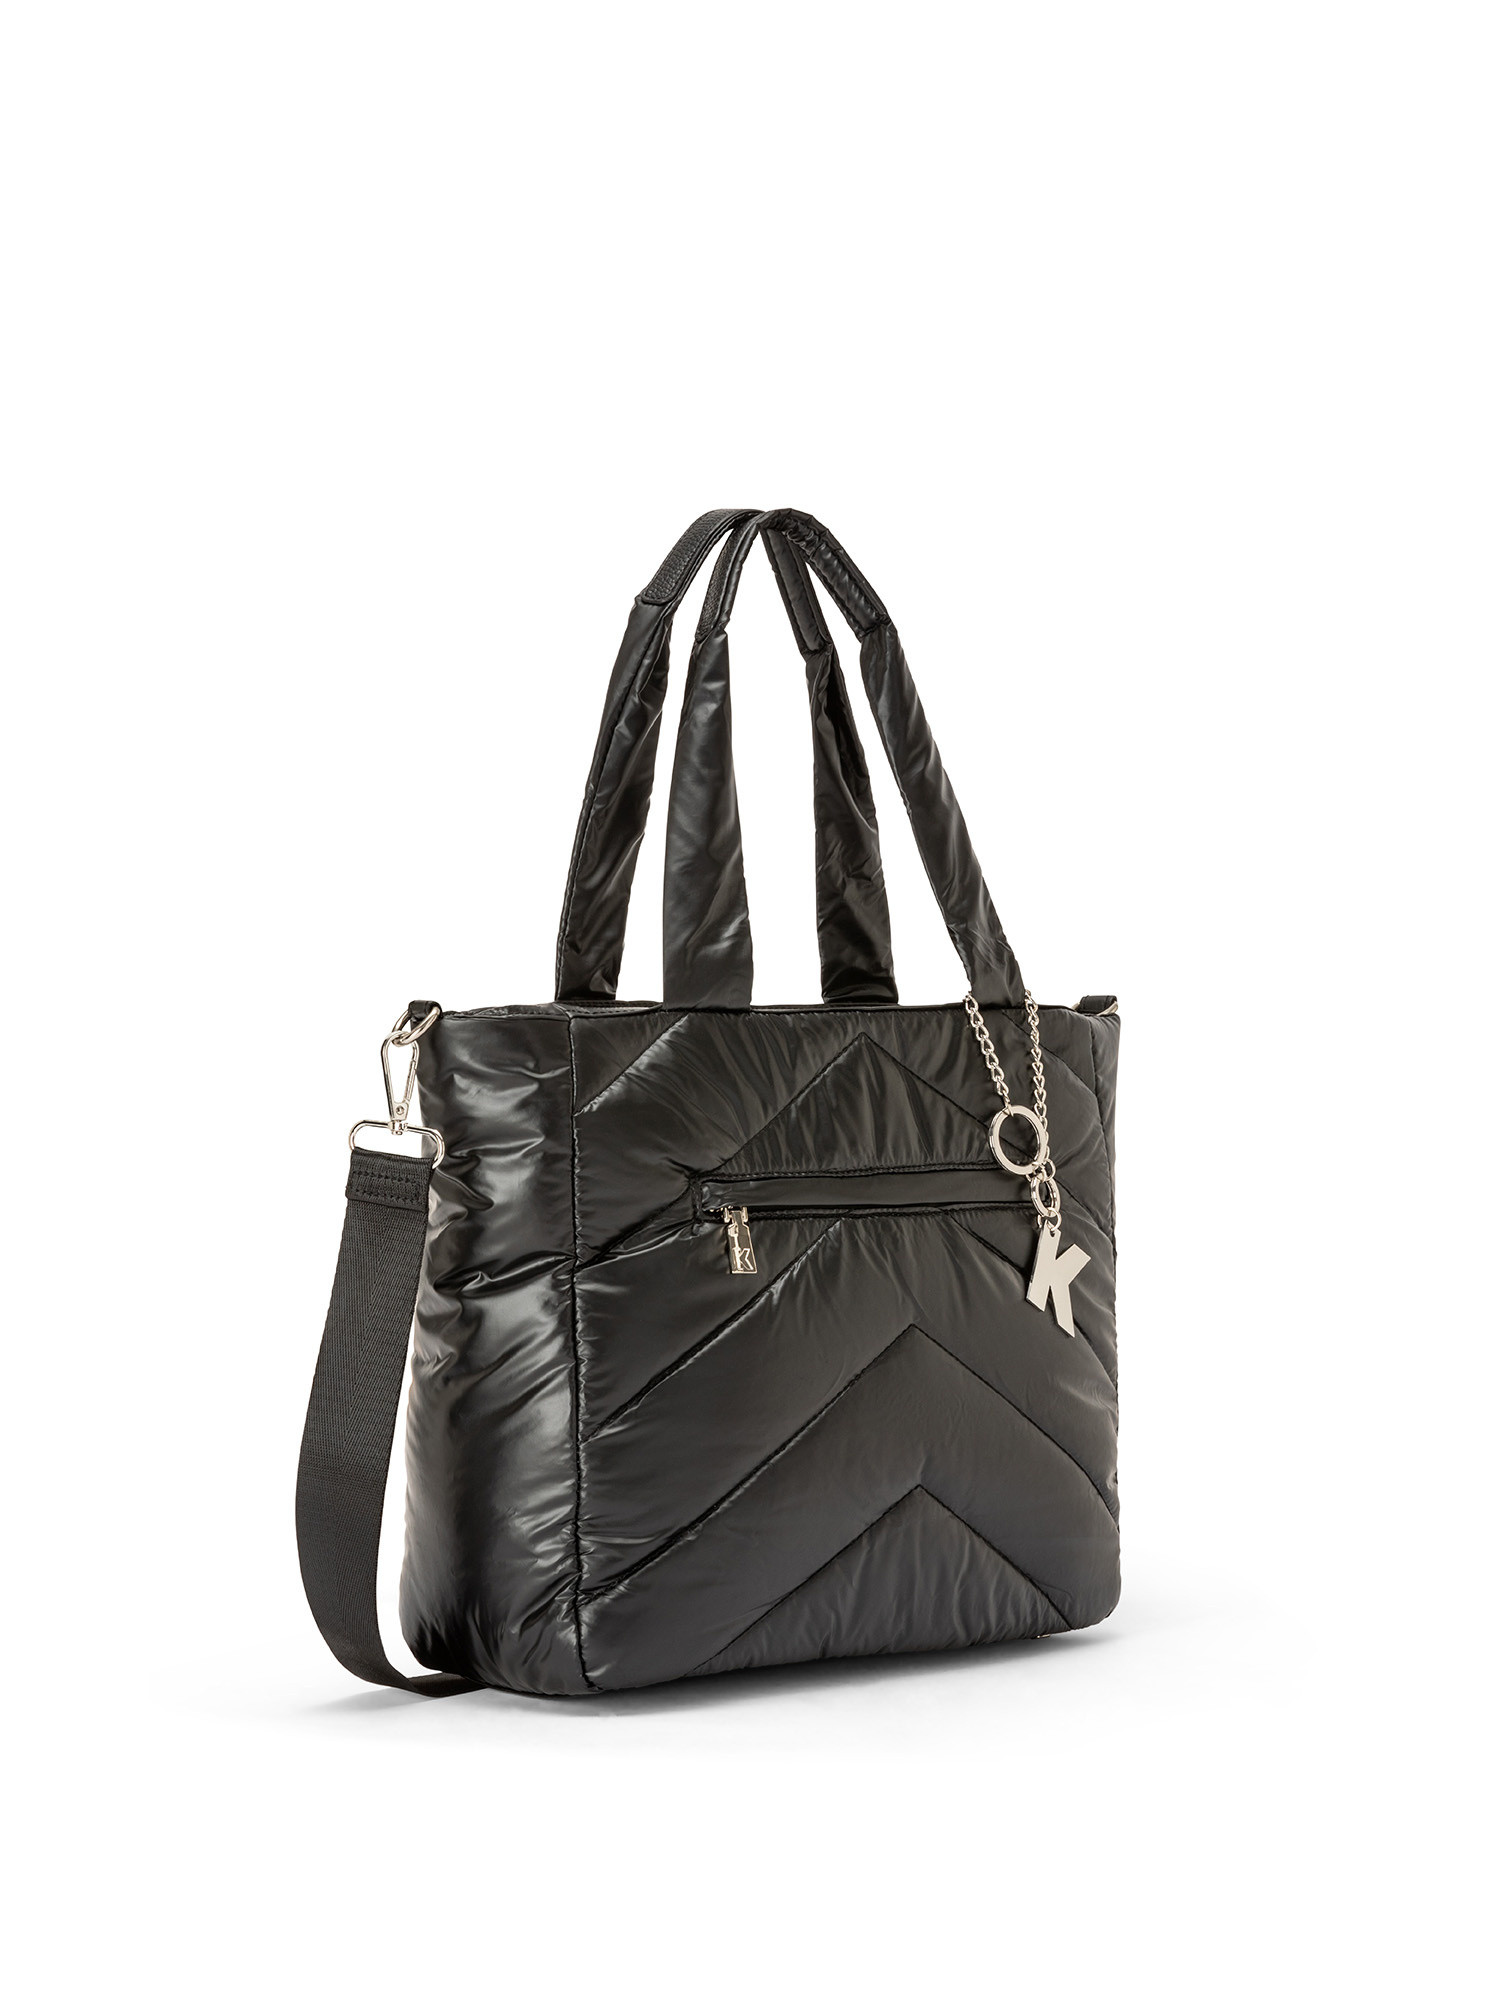 Koan - Nylon shopping bag, Black, large image number 1